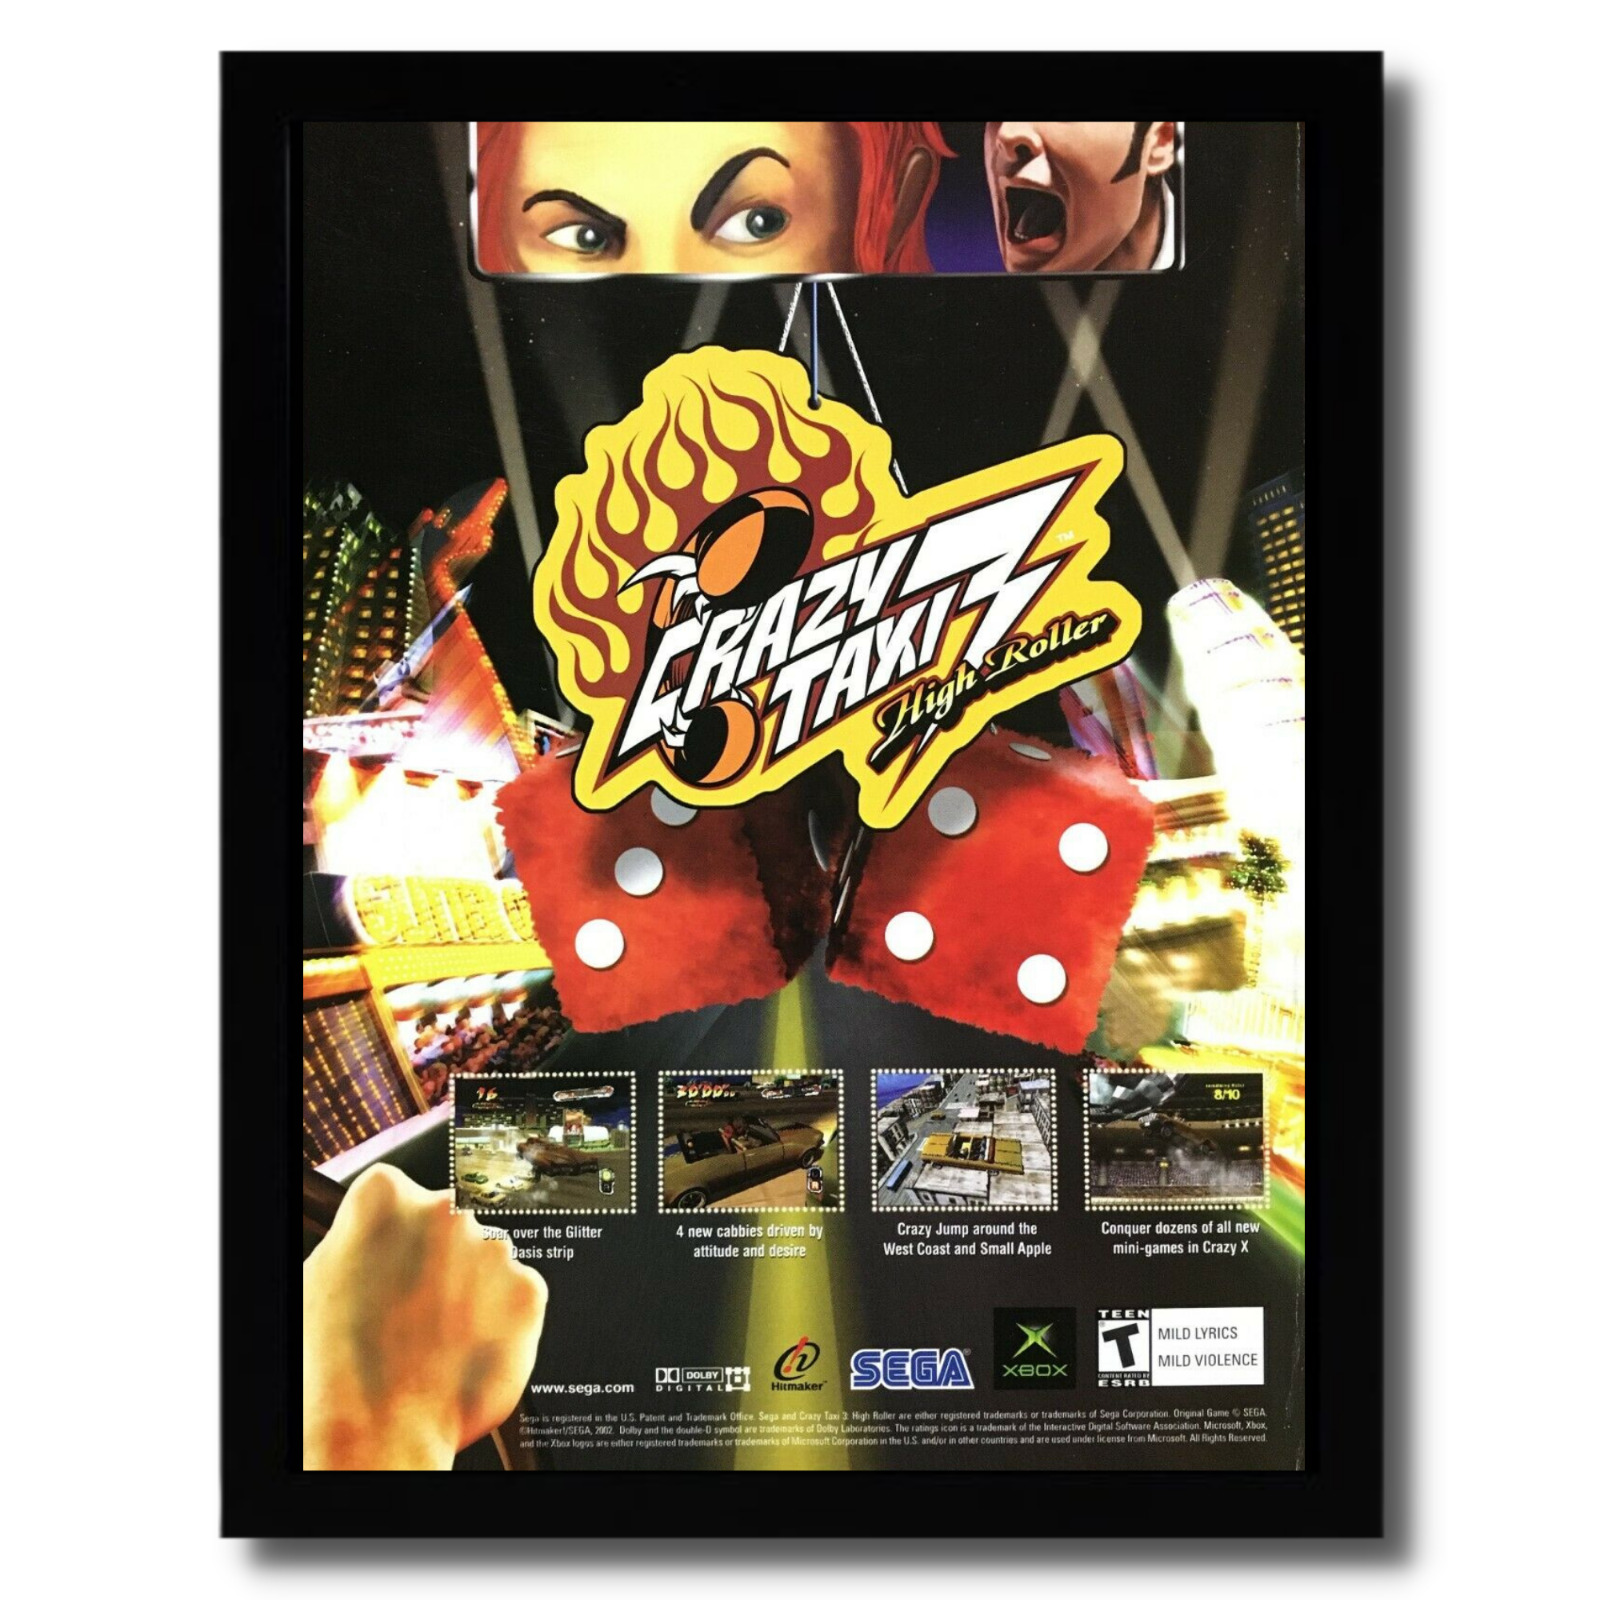 2002 Crazy Taxi 3: High Roller Framed Print Ad/Poster Original Xbox SEGA Art